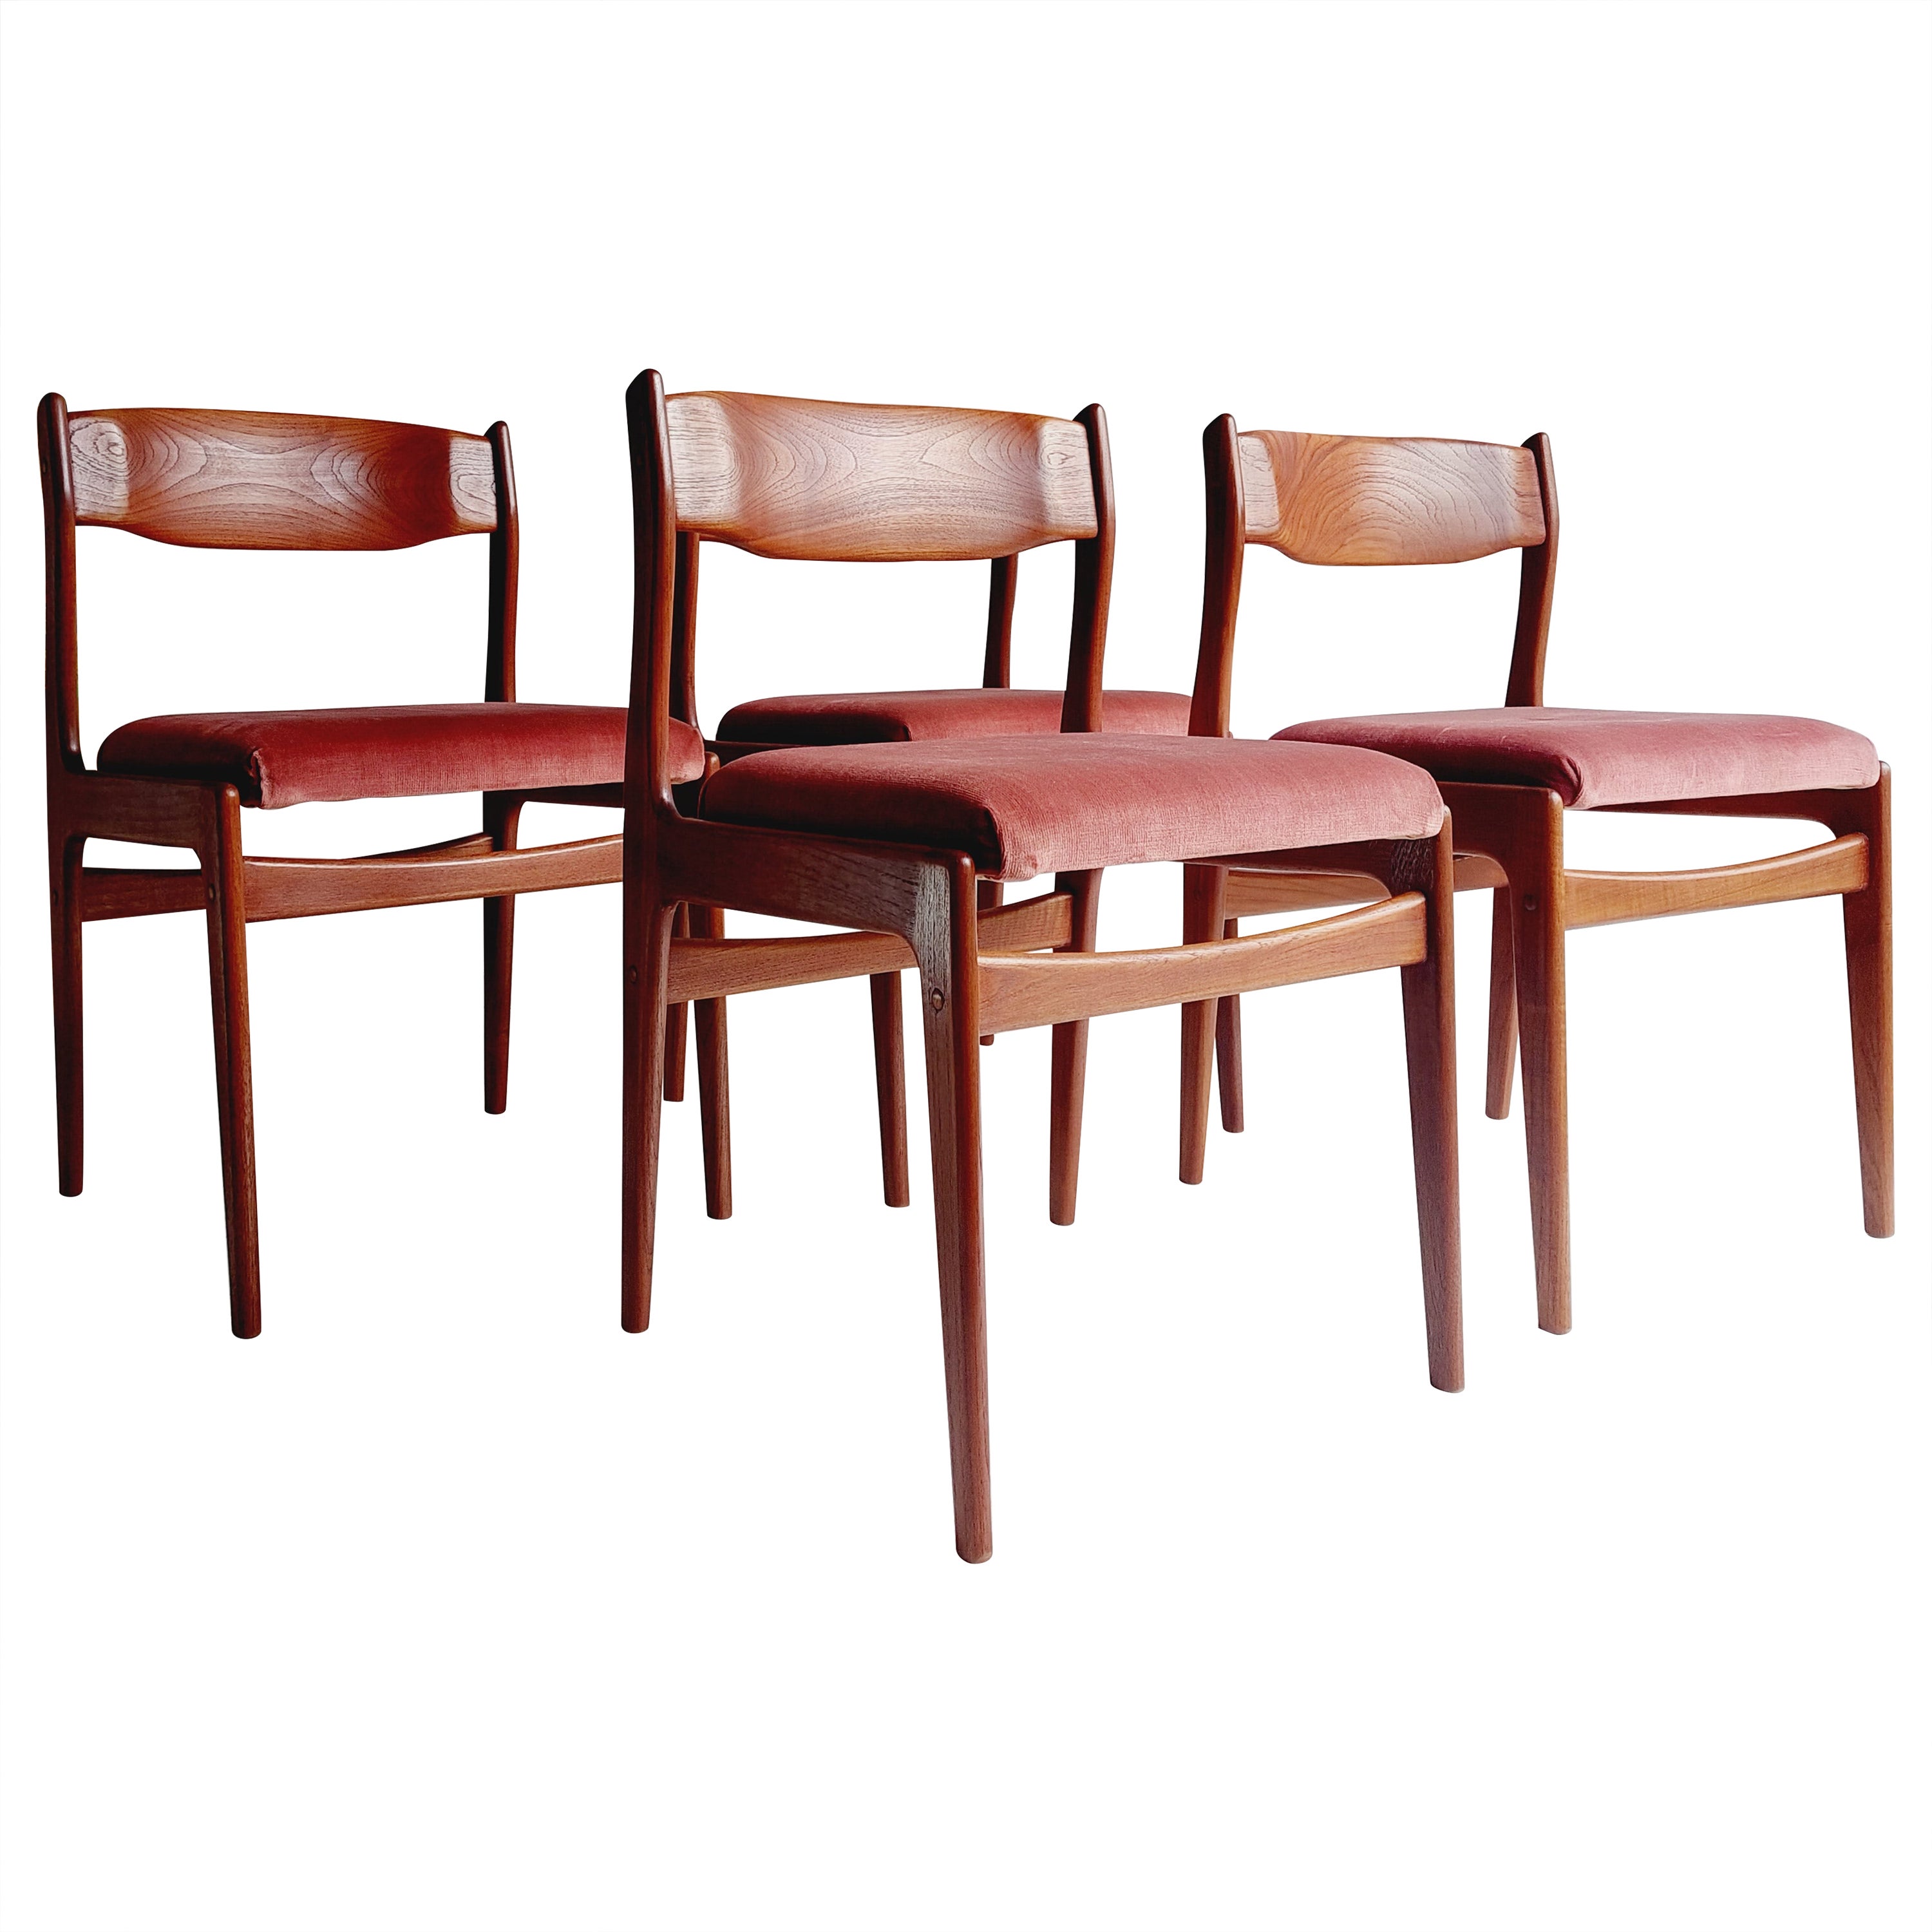 Mid Century teak Danish dining chairs 60s, Erik Buch style, set of 4